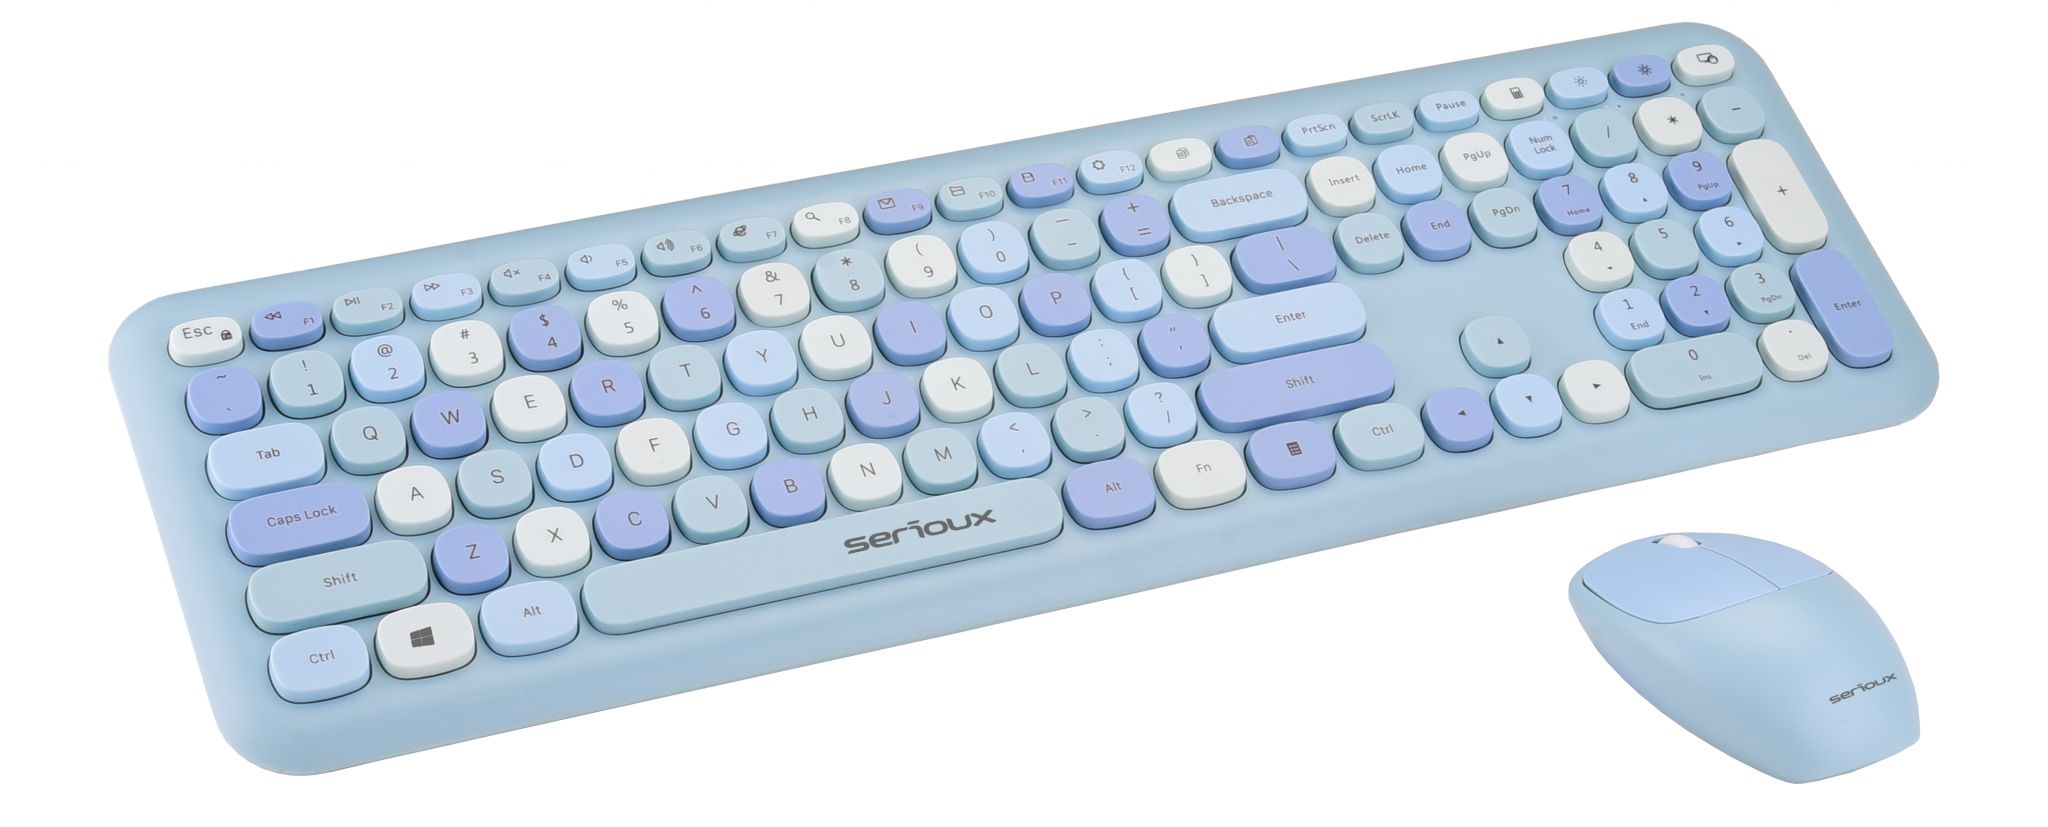 Kit tastatura + mouse Serioux Colourful 9920BL, wireless 2.4GHz, US layout, multimedia, mouse optic 1200dpi, USB, nano receiver, albastru_1